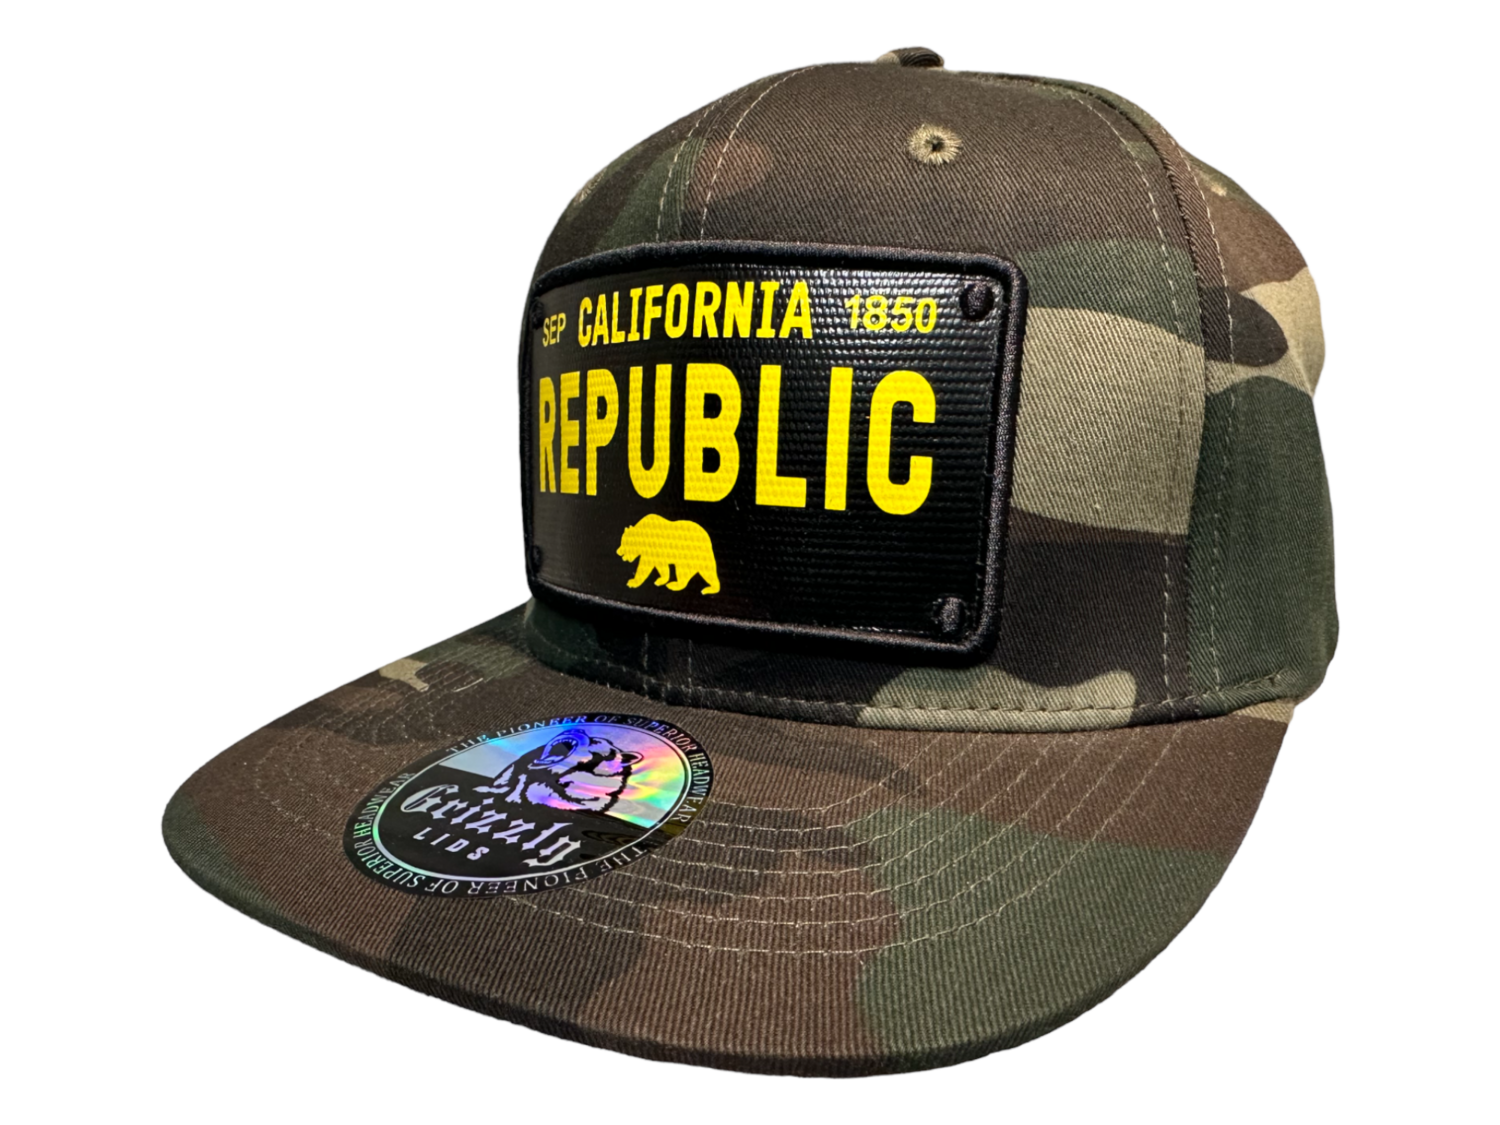 California Republic License Plate Snapback 6 Panel Adjustable Snap Fit Hat